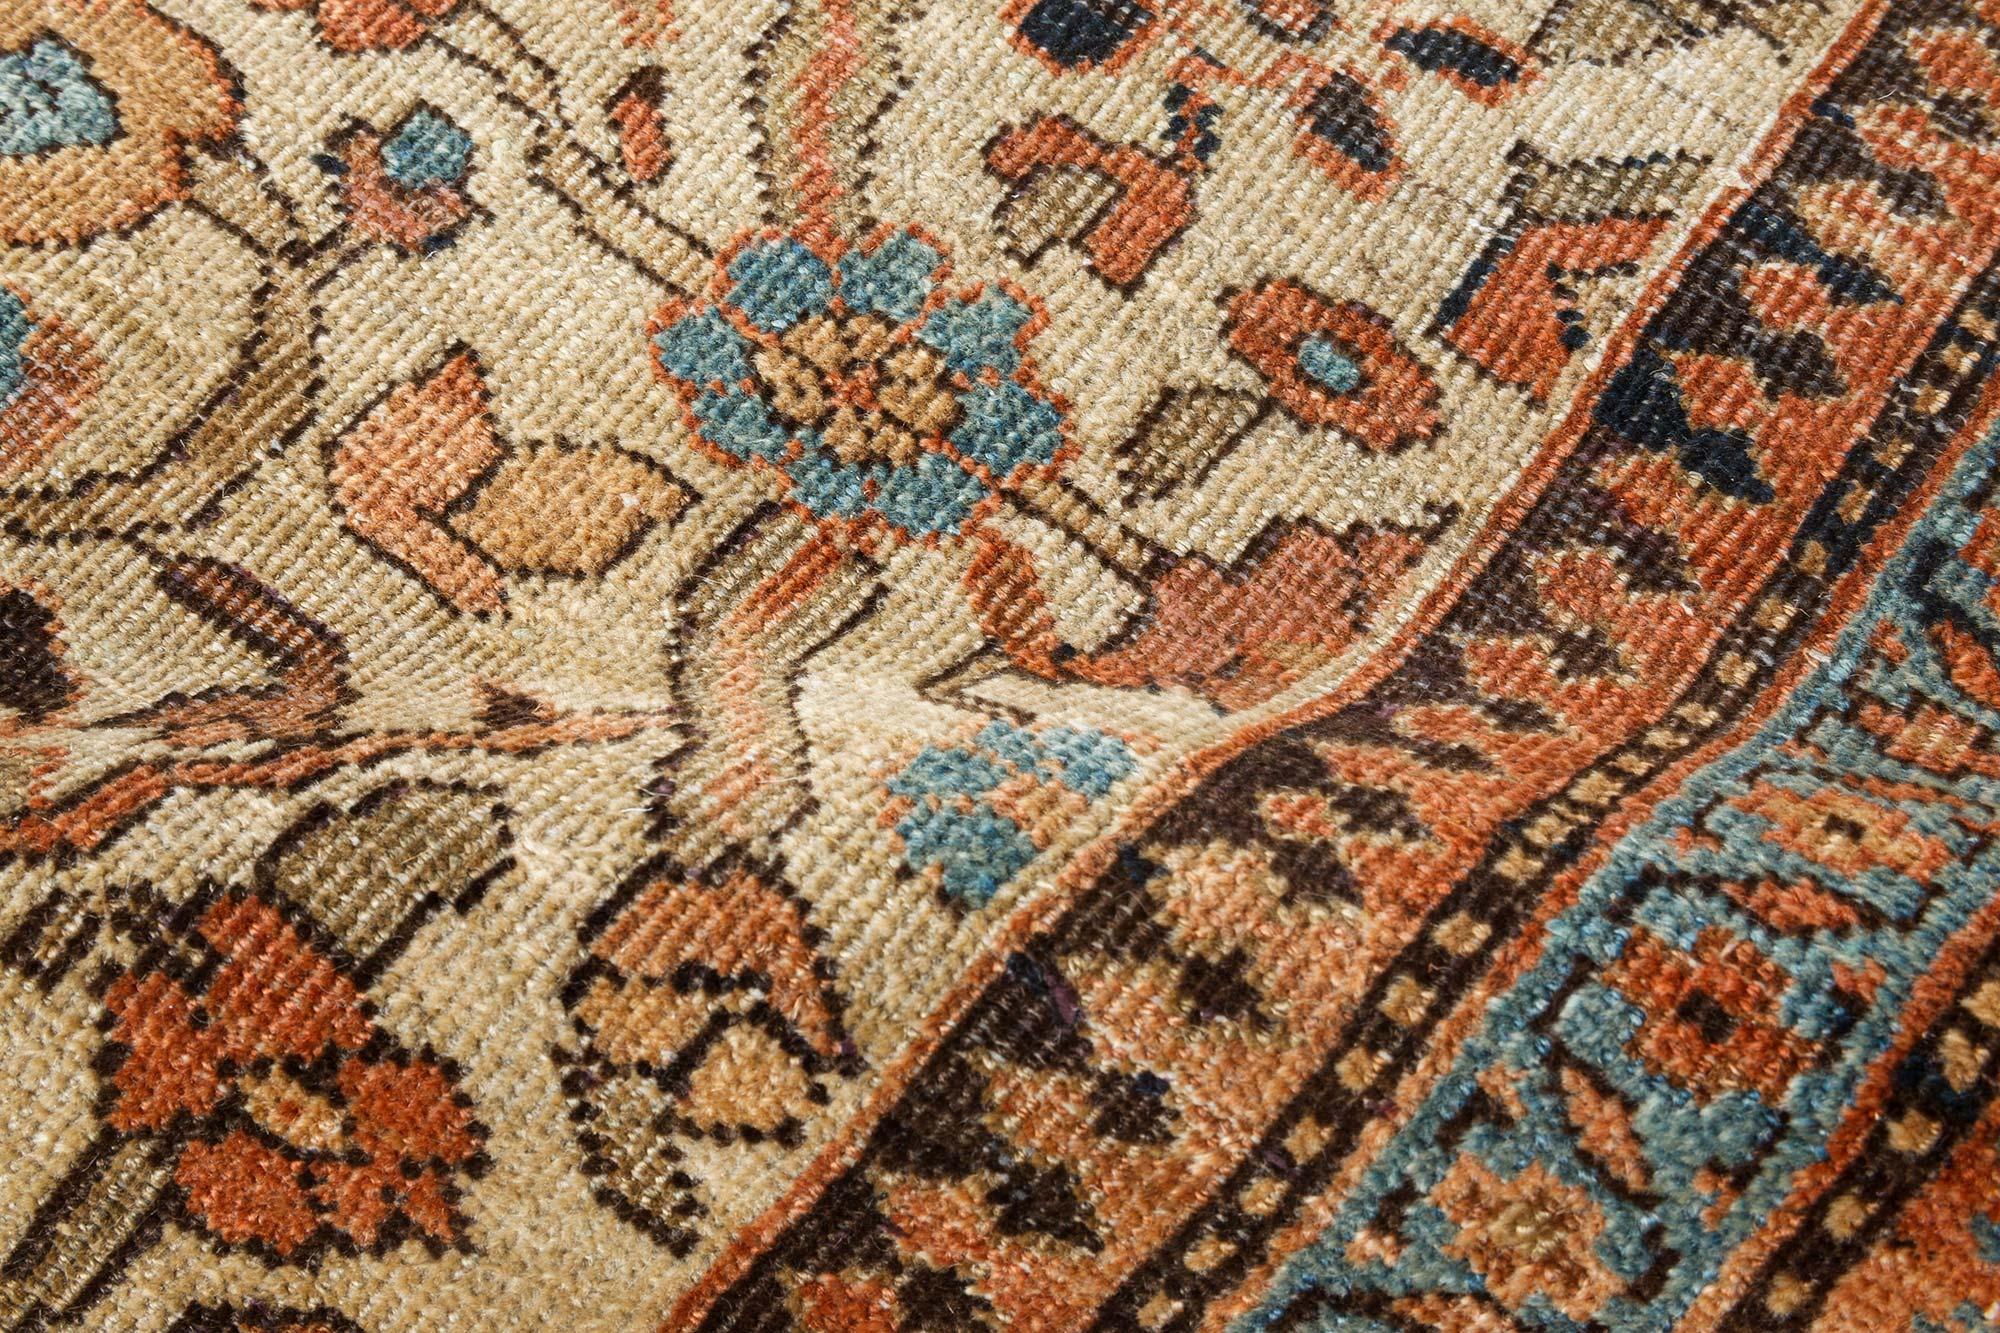 Oversized antique Persian Sultanabad Botanic handmade wool rug
Size: 14'7